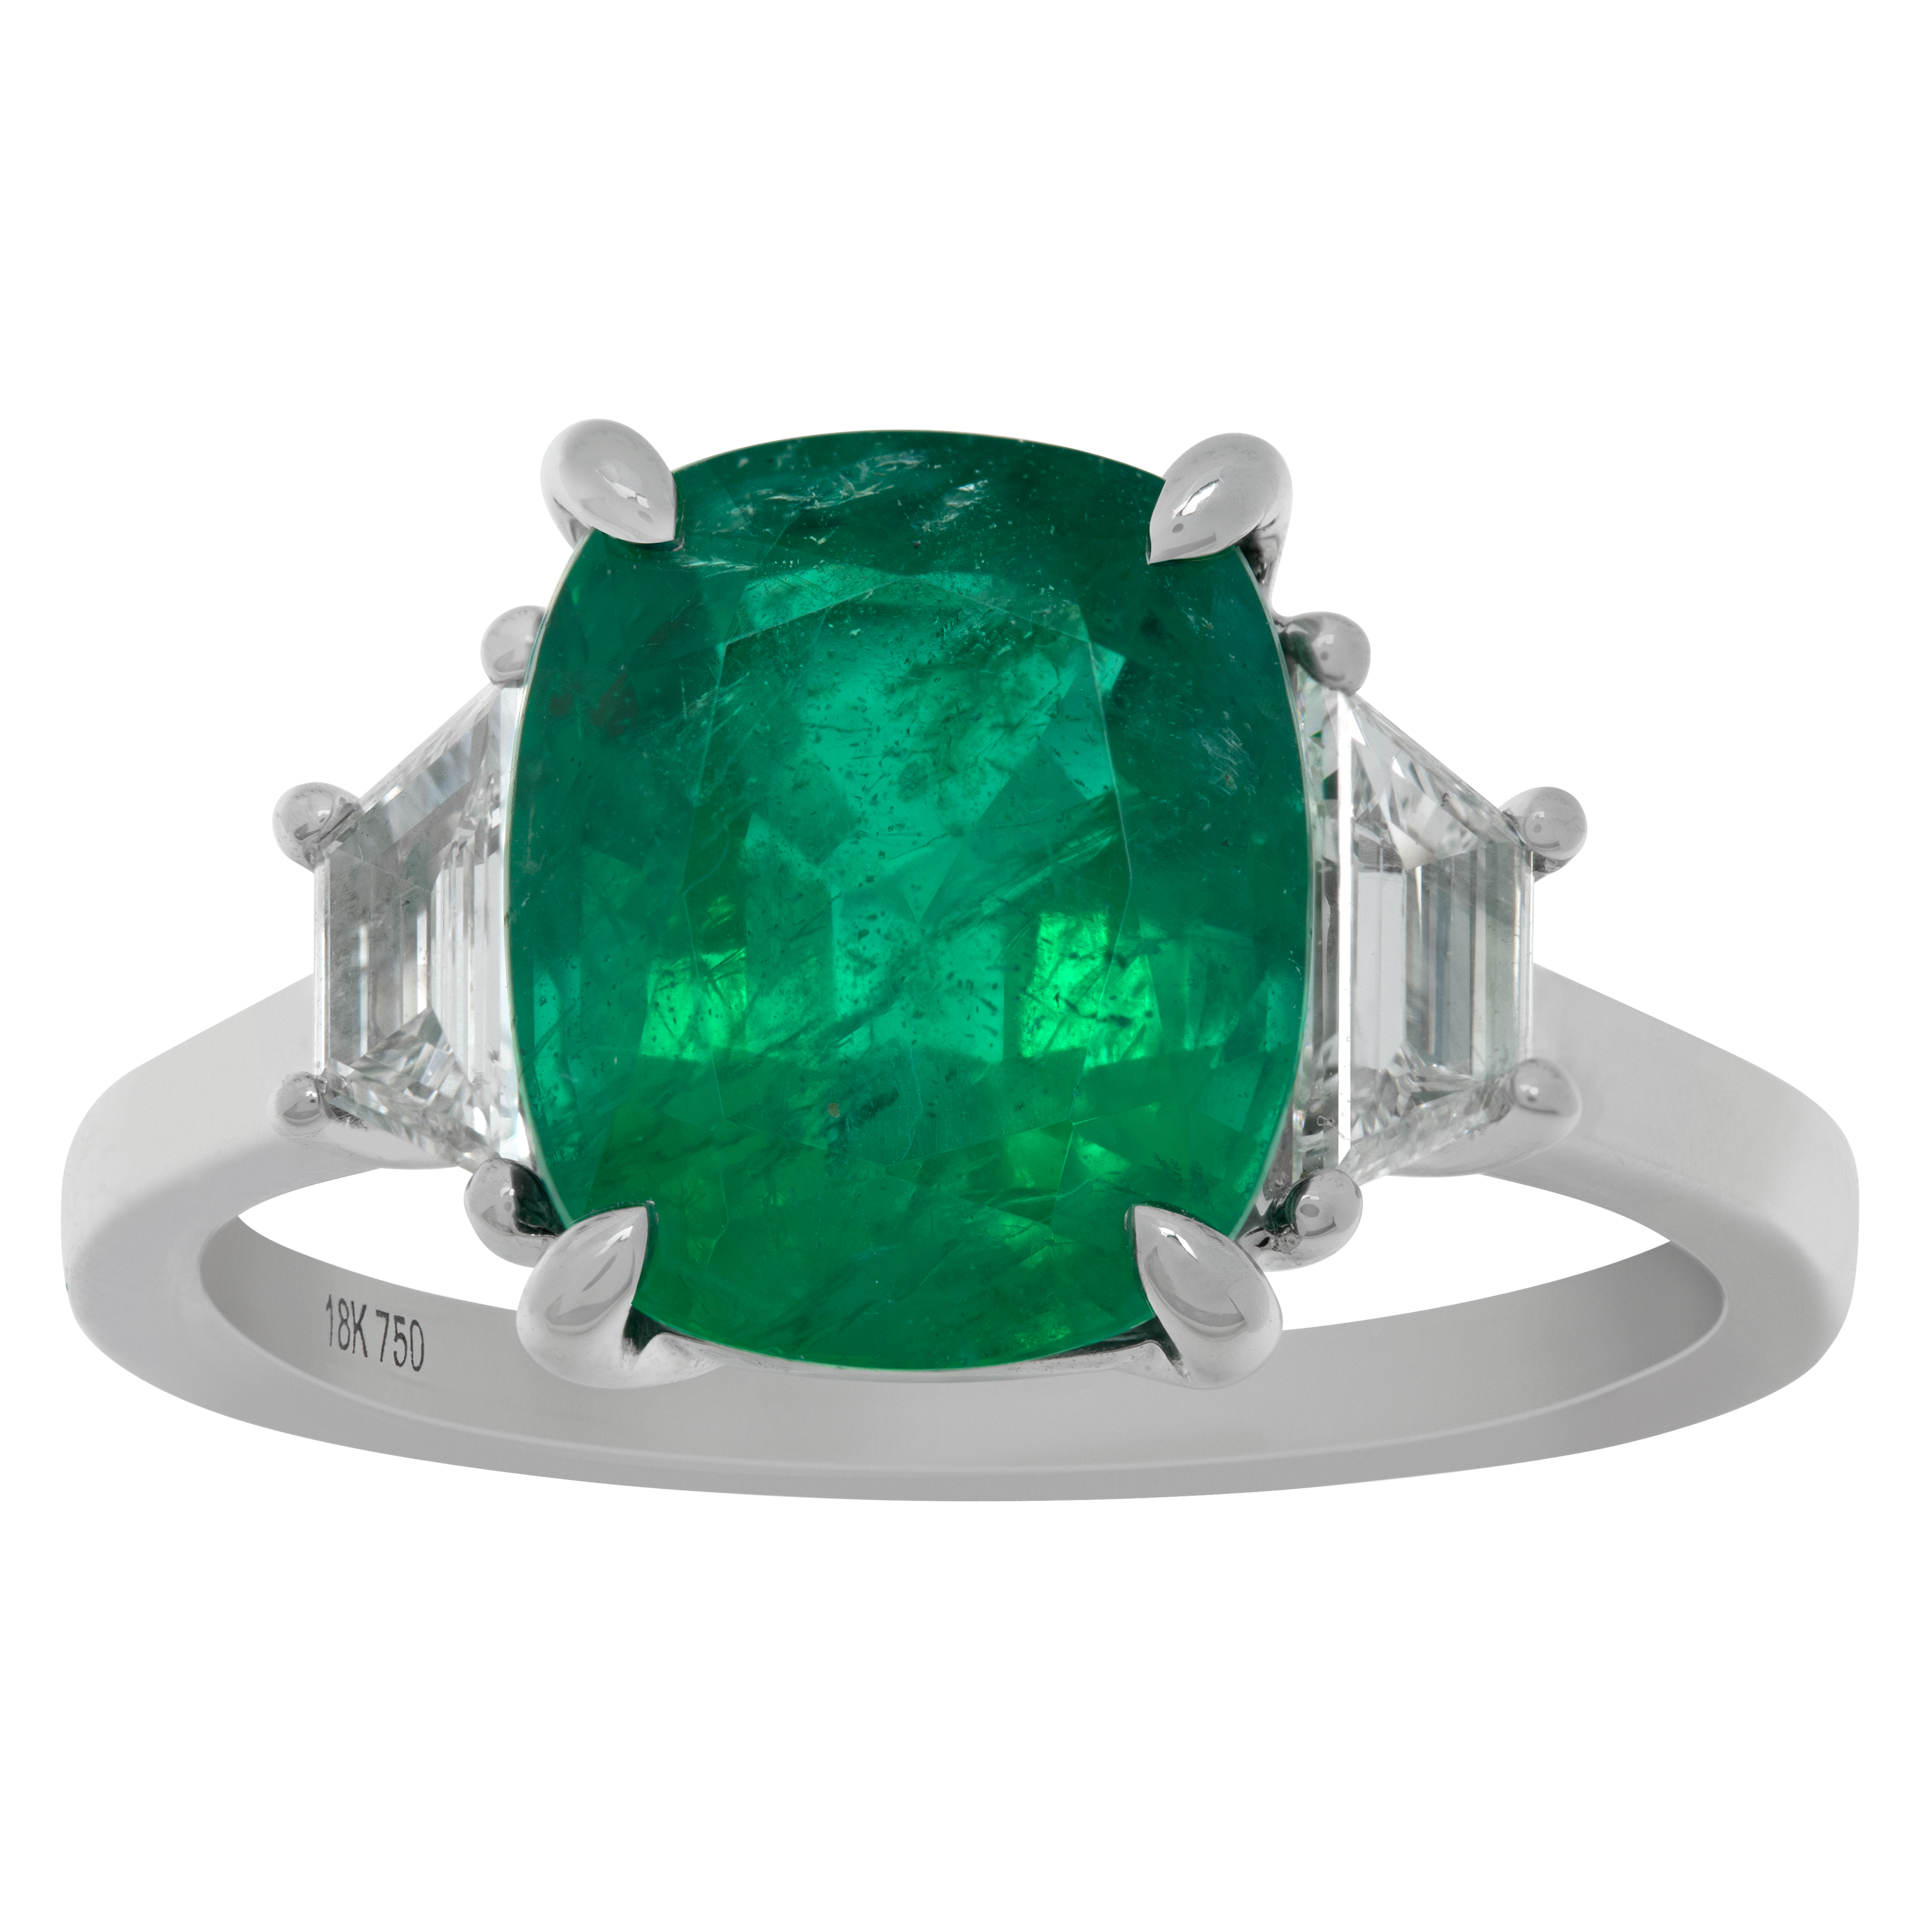 GIA certified 4.11 carat natural beryl cushion cut emerald ring image 1